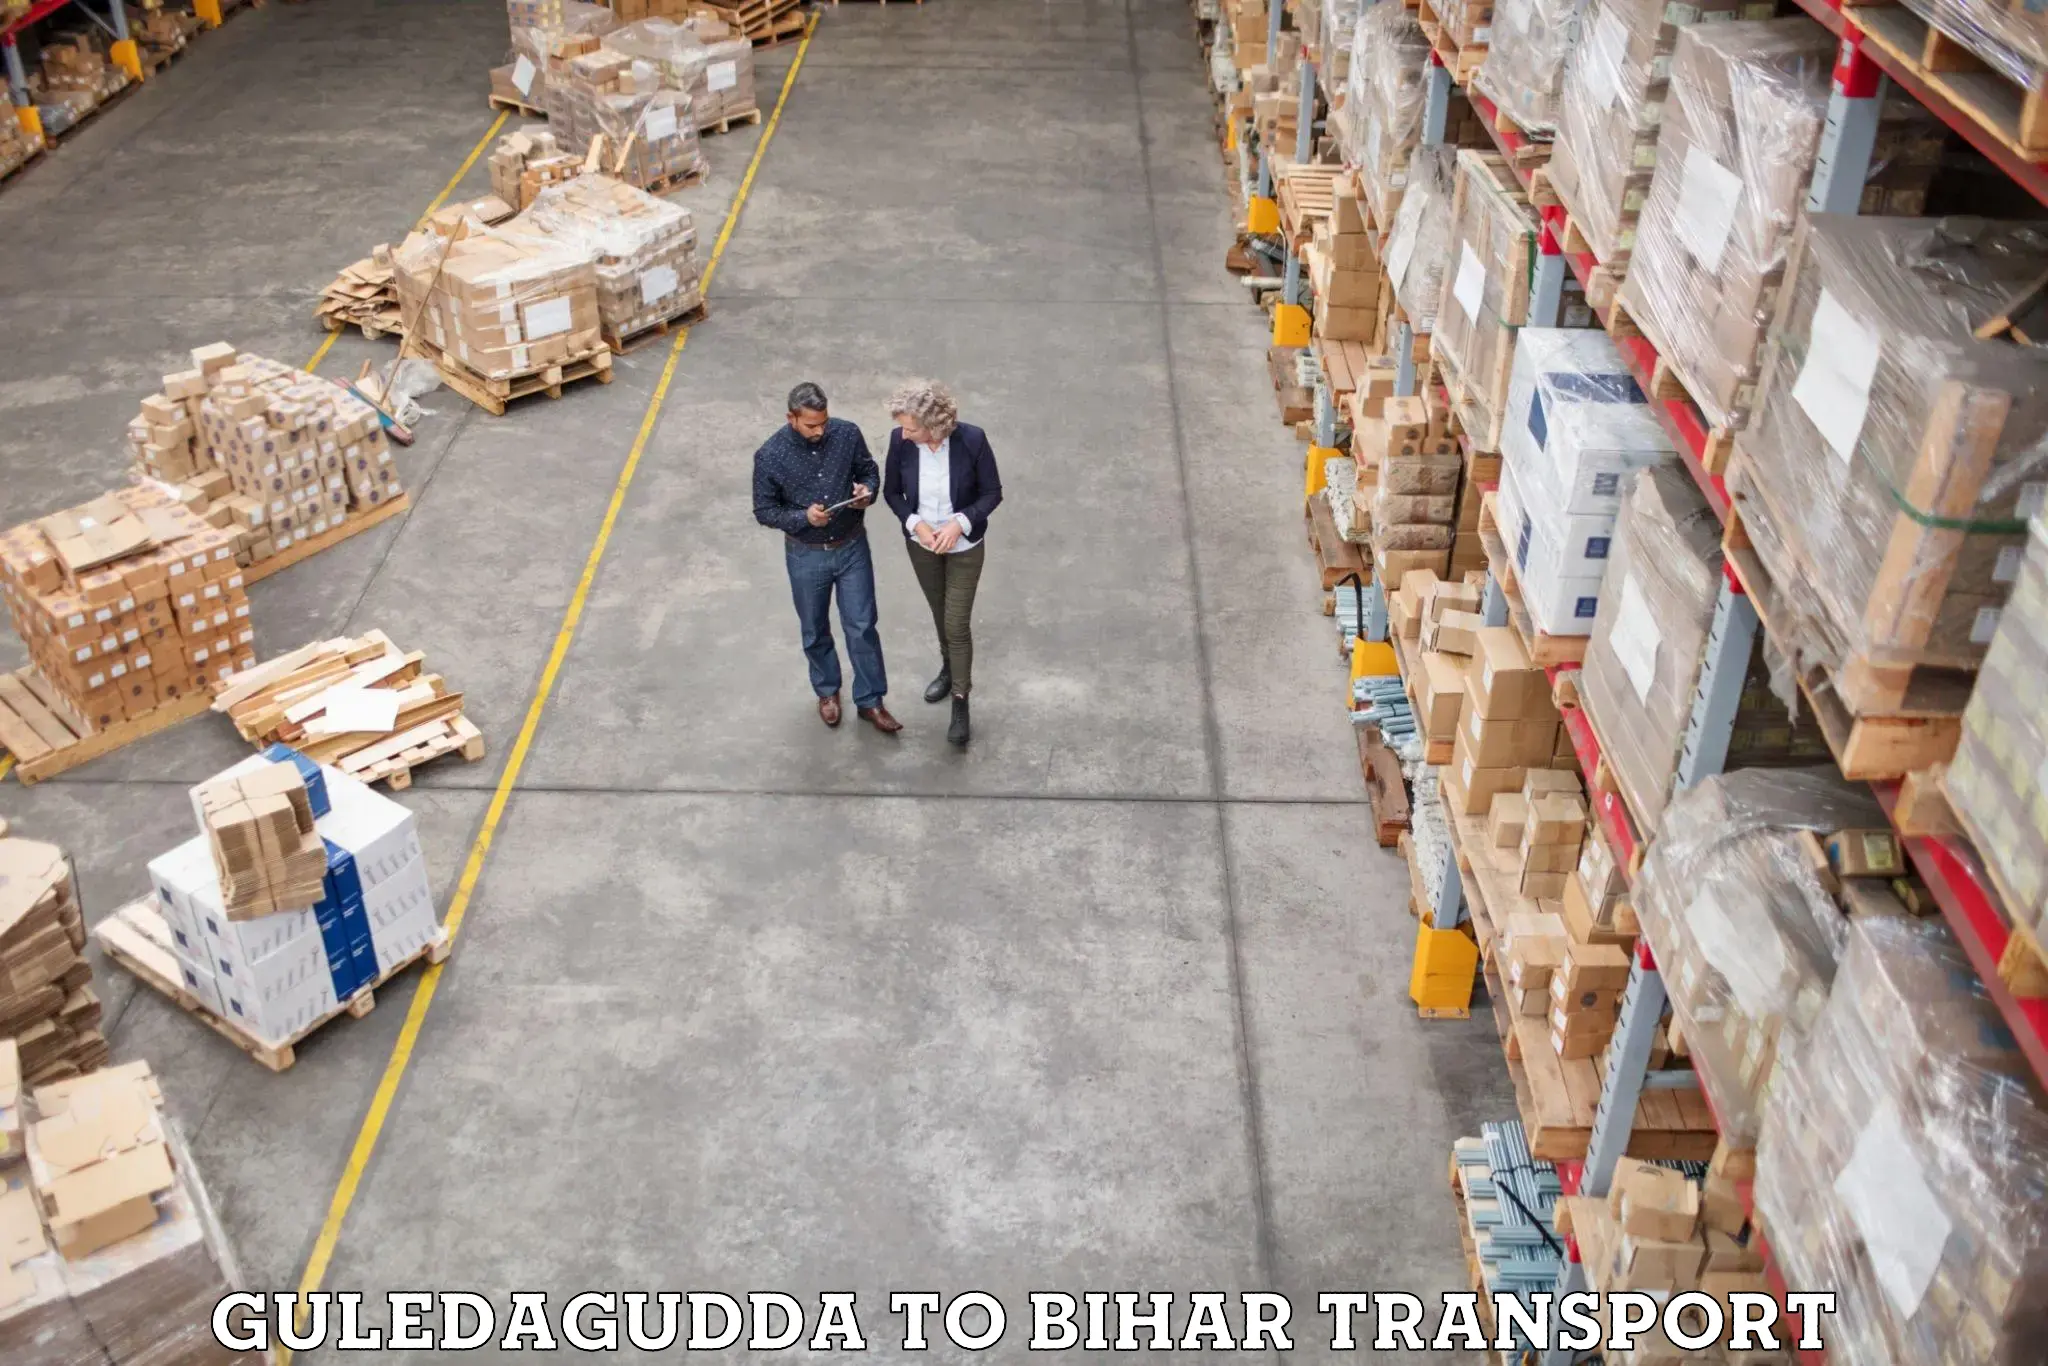 Delivery service Guledagudda to Bihar